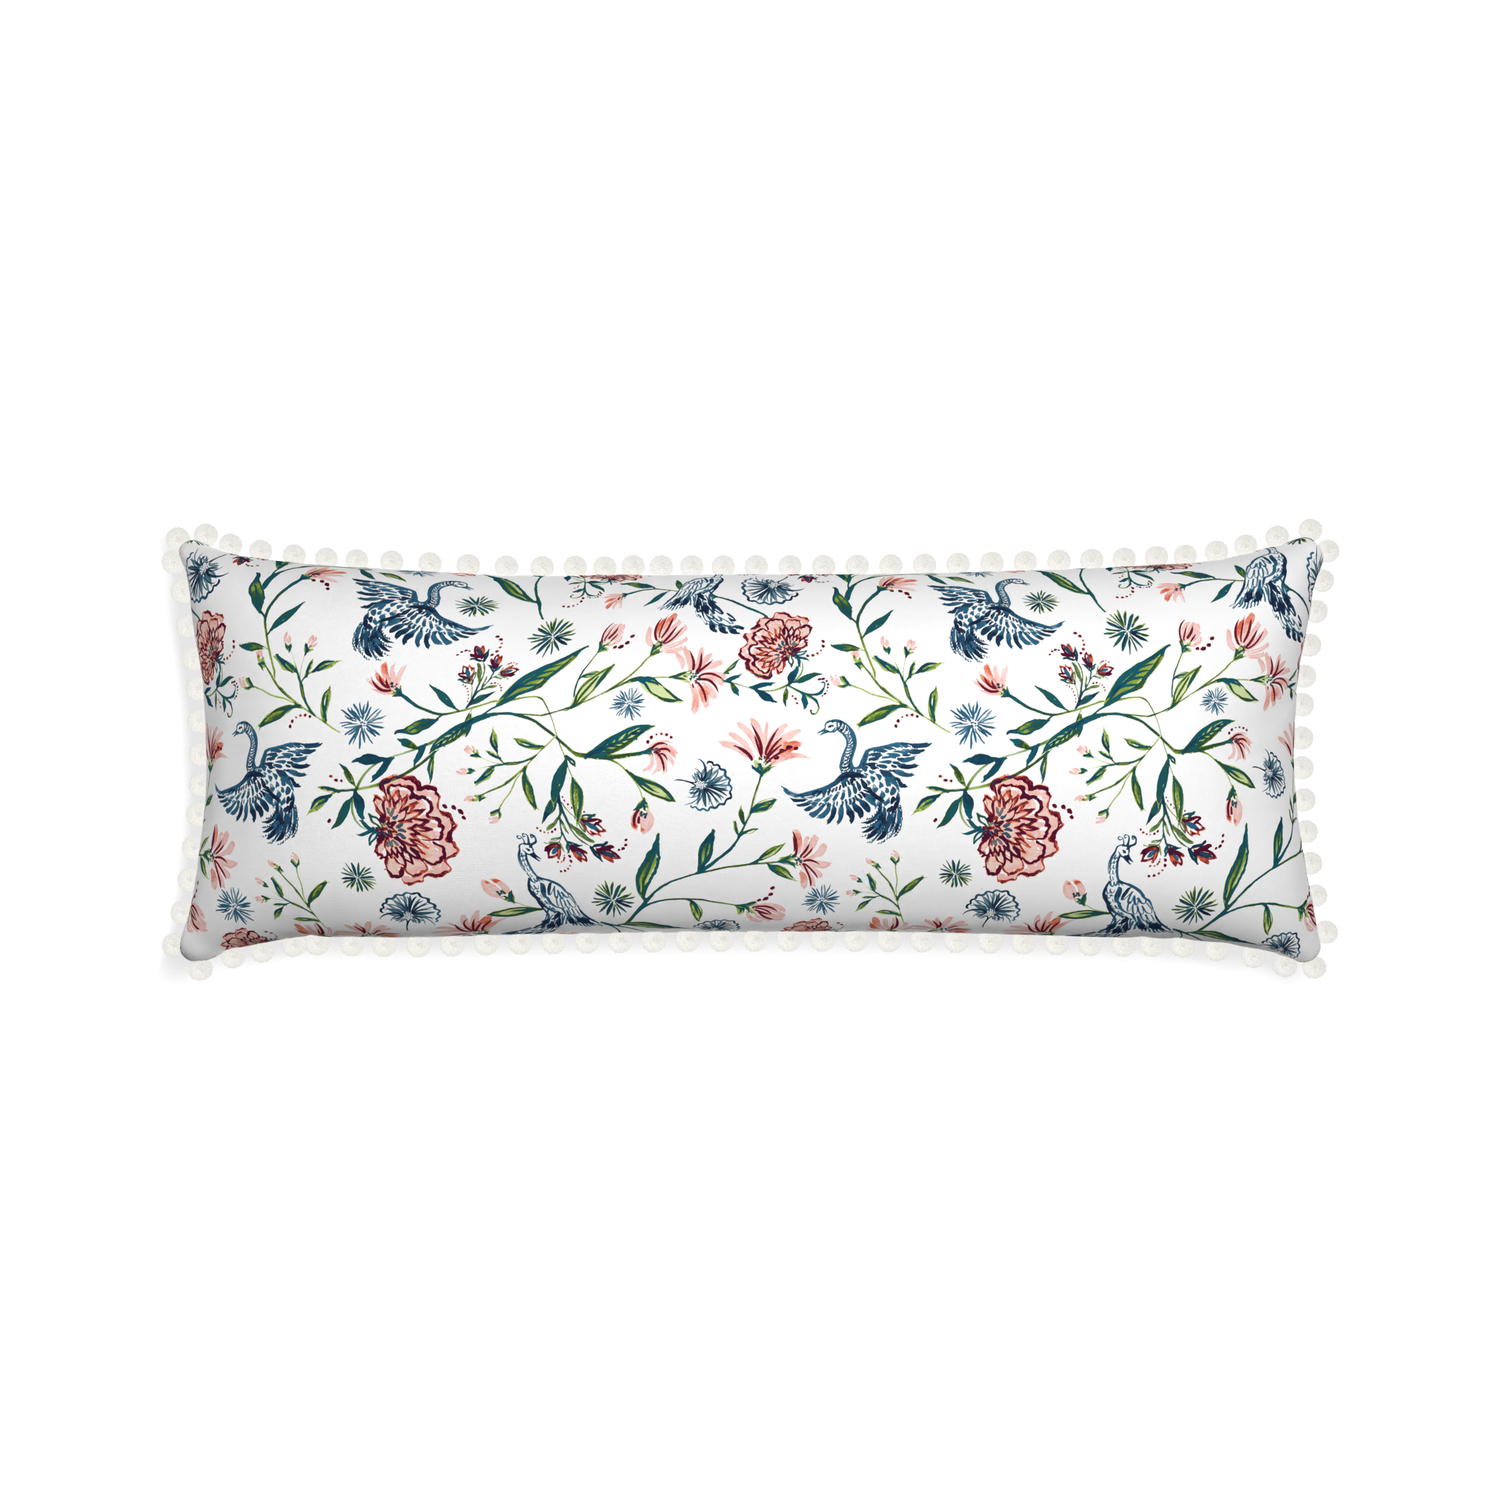 Xl-lumbar daphne cream custom pillow with snow pom pom on white background